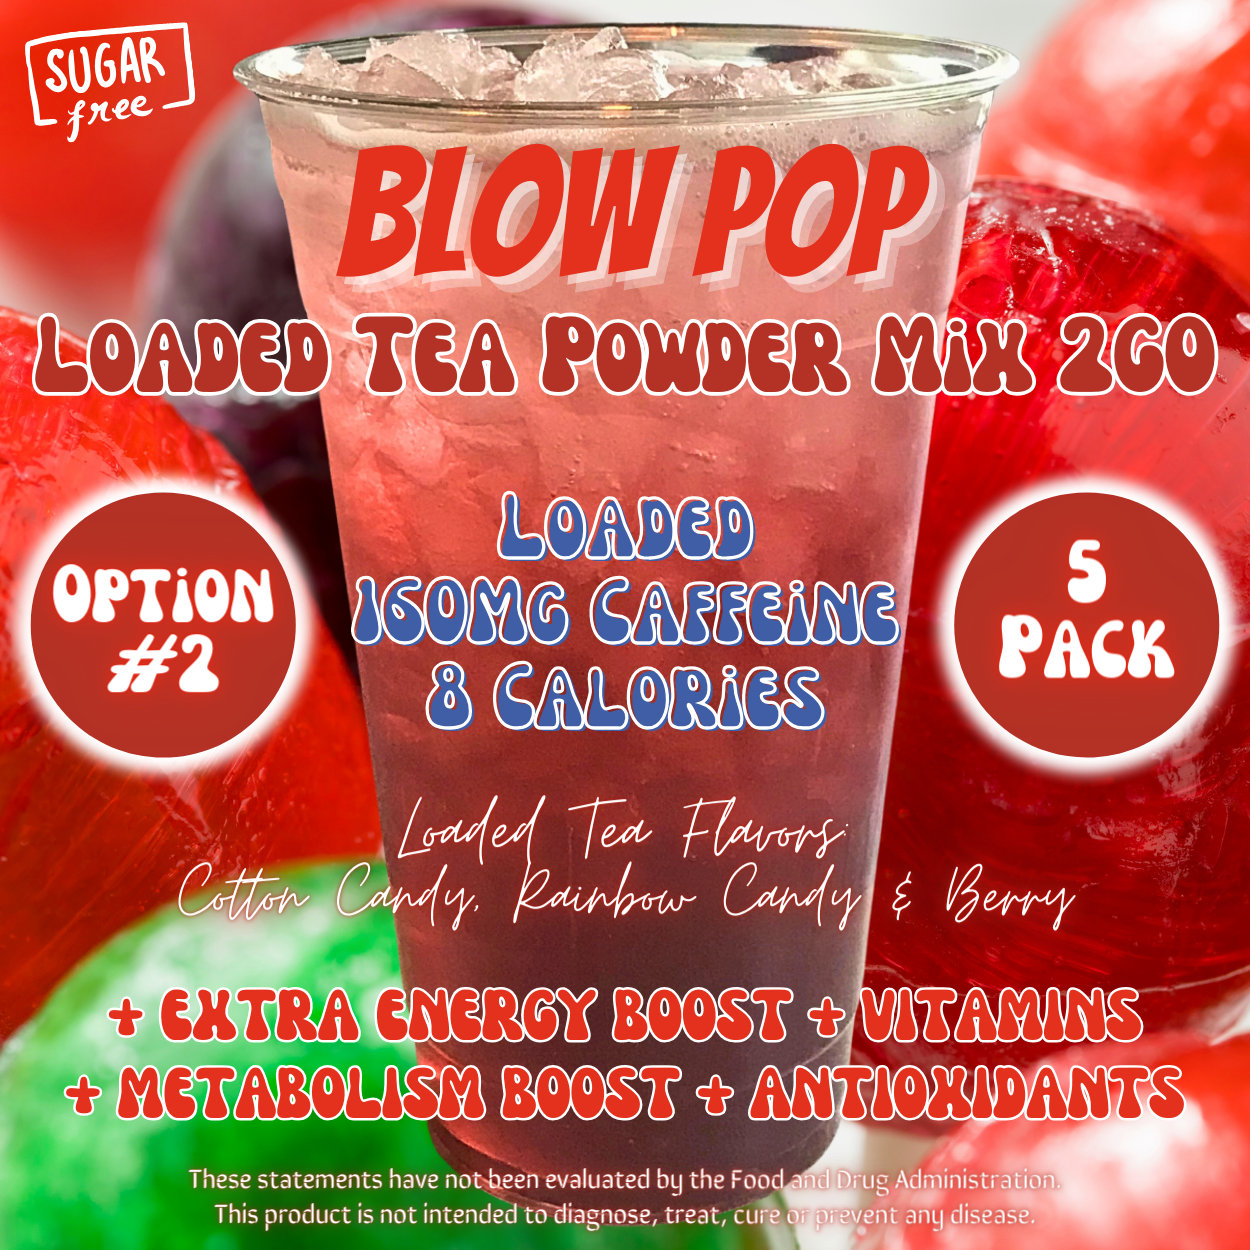 Blow Pop: Loaded Tea Powder Mix 2GO Packets